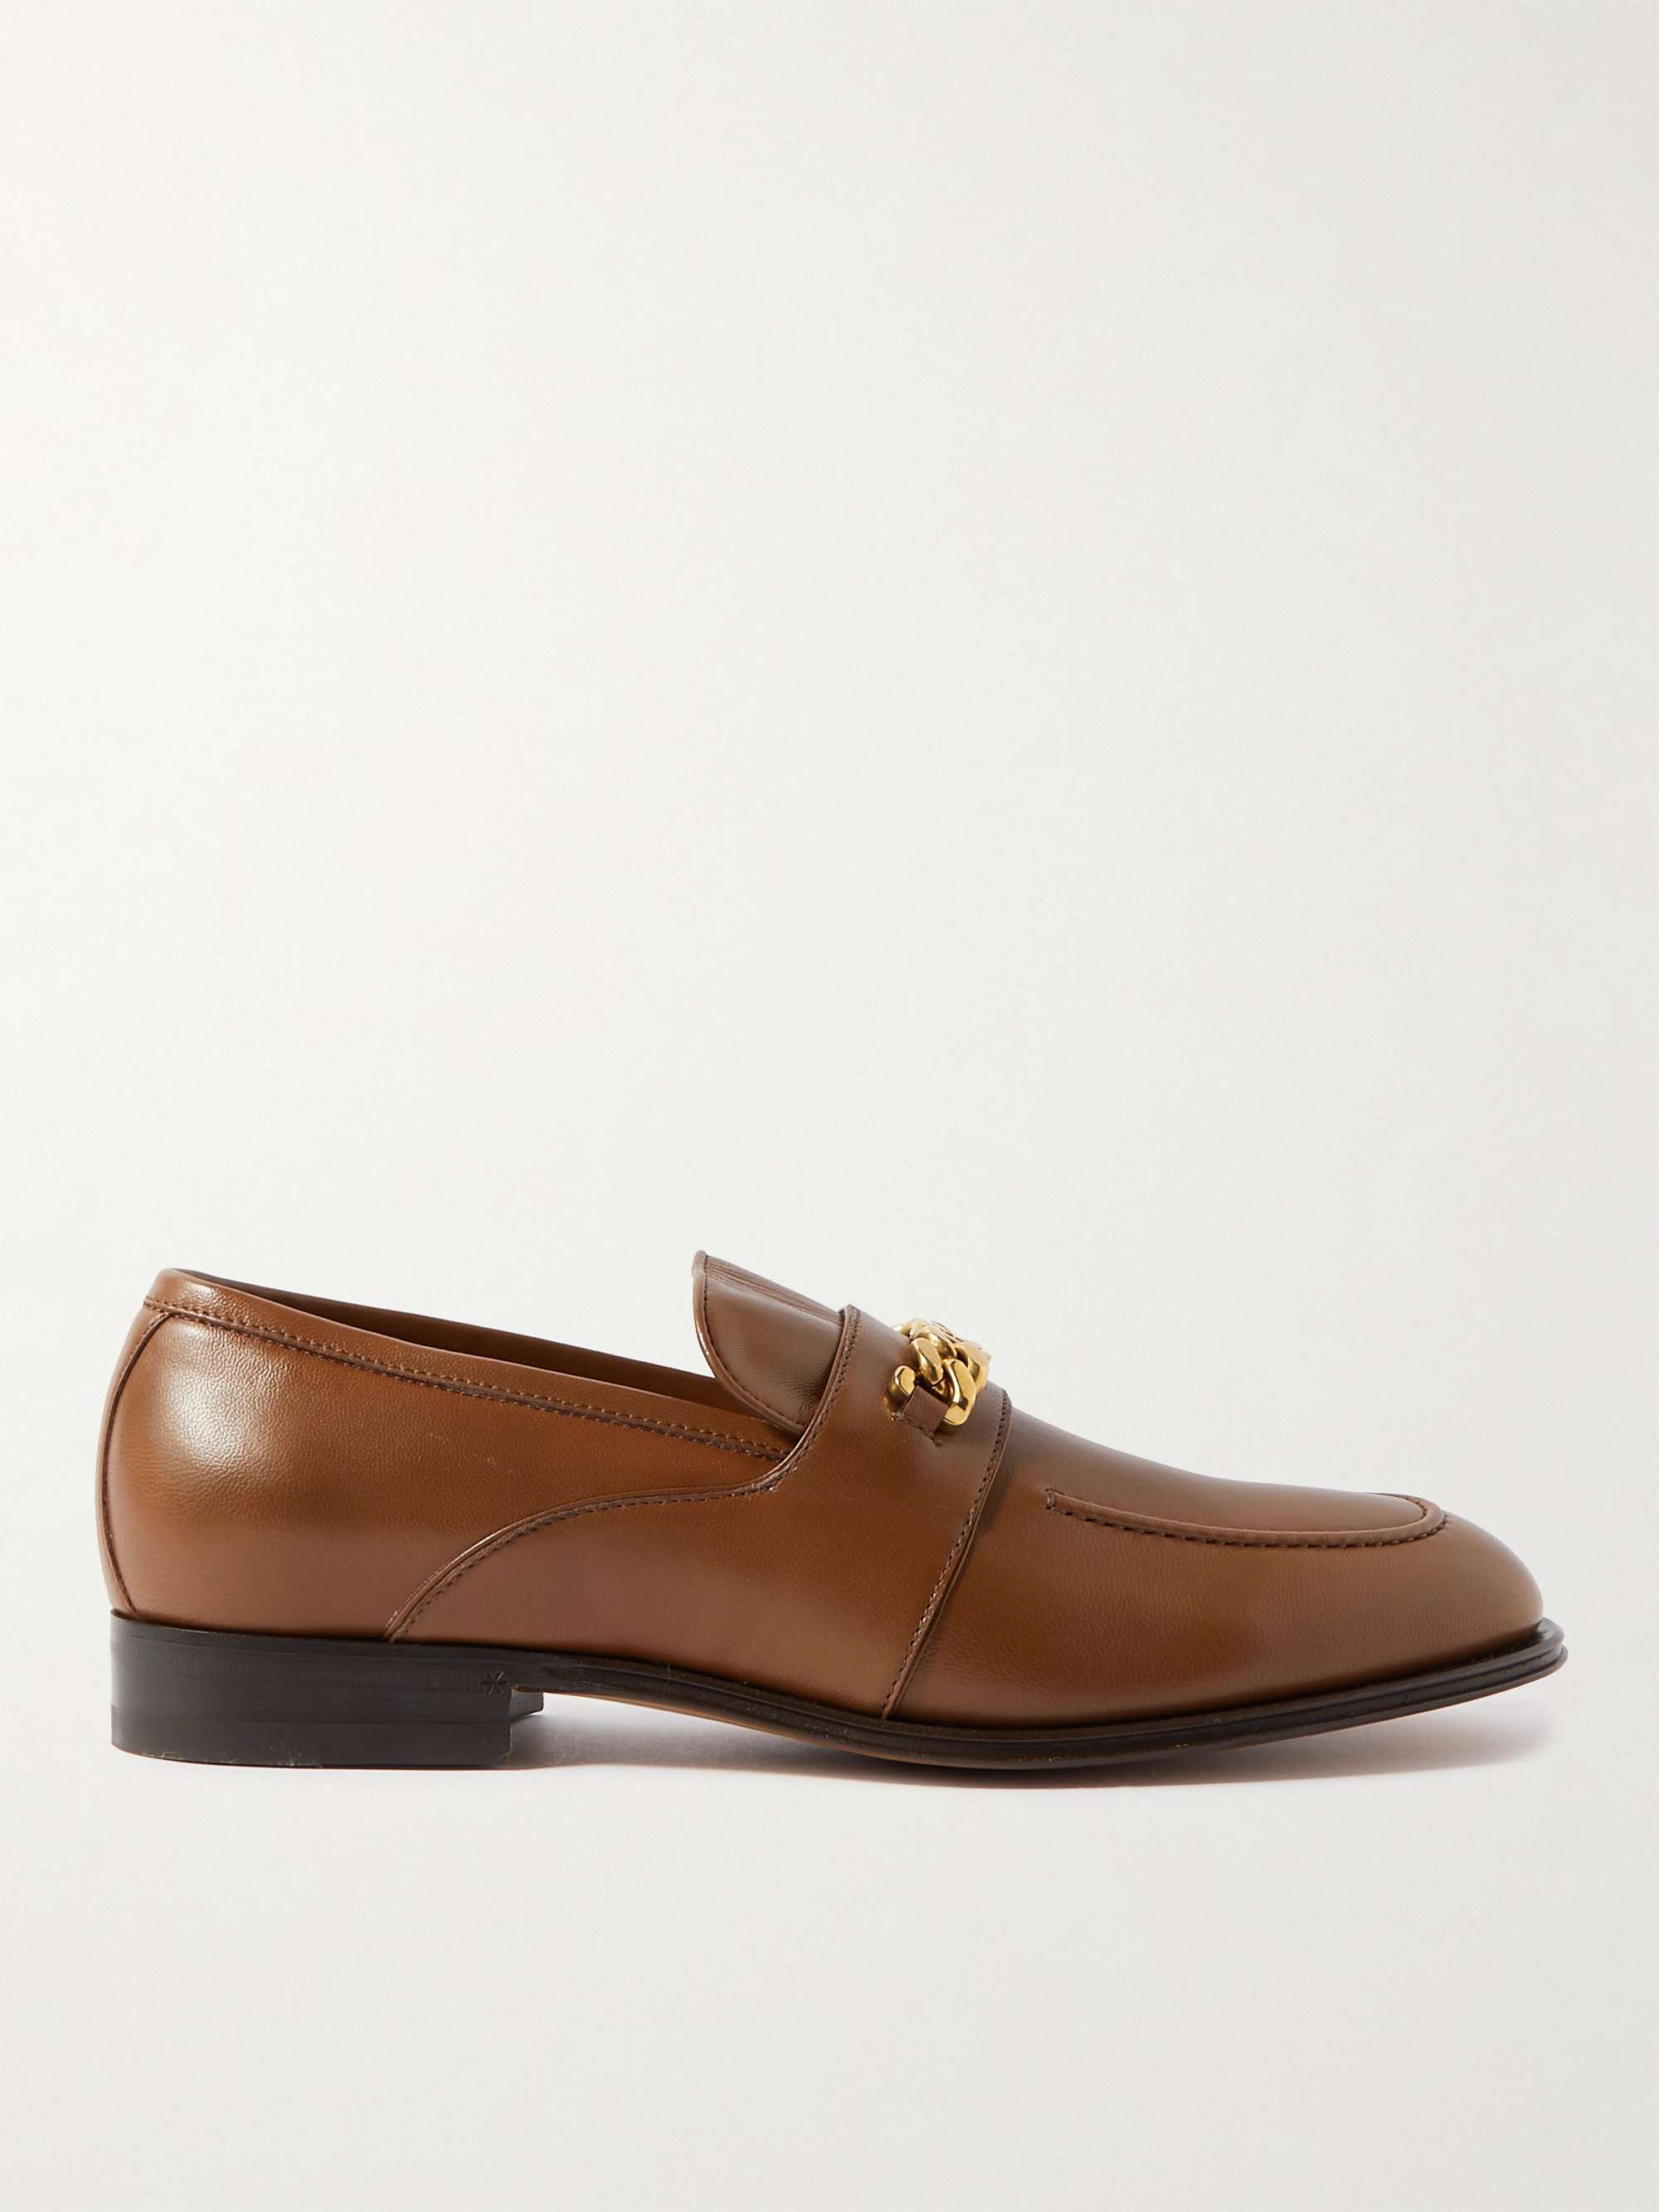 GUCCI Horsebit Leather Loafers | MR PORTER